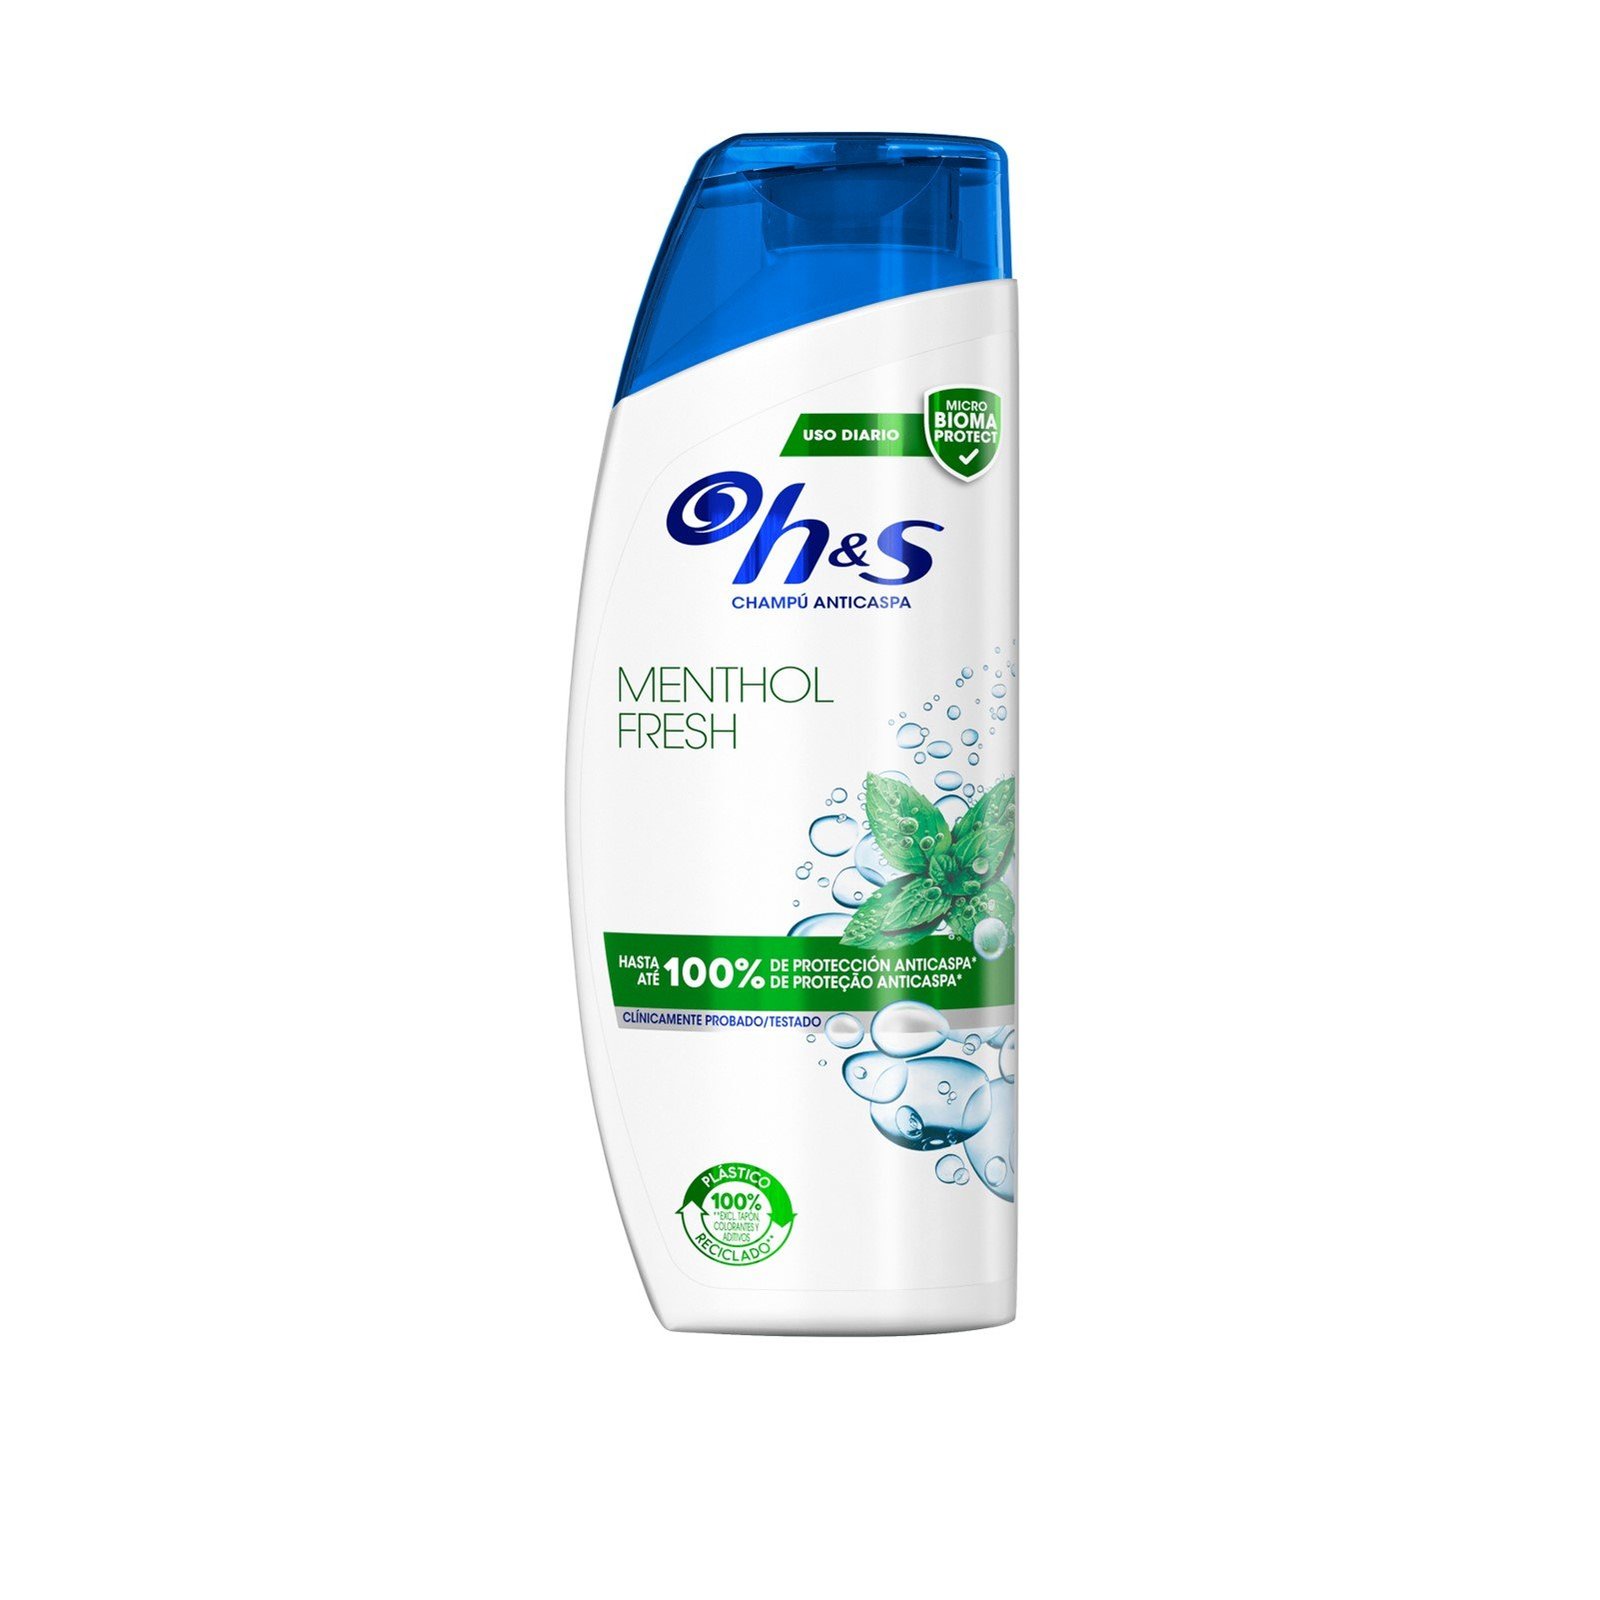 H&S Menthol Fresh Shampoo 600ml (20.2 fl oz)